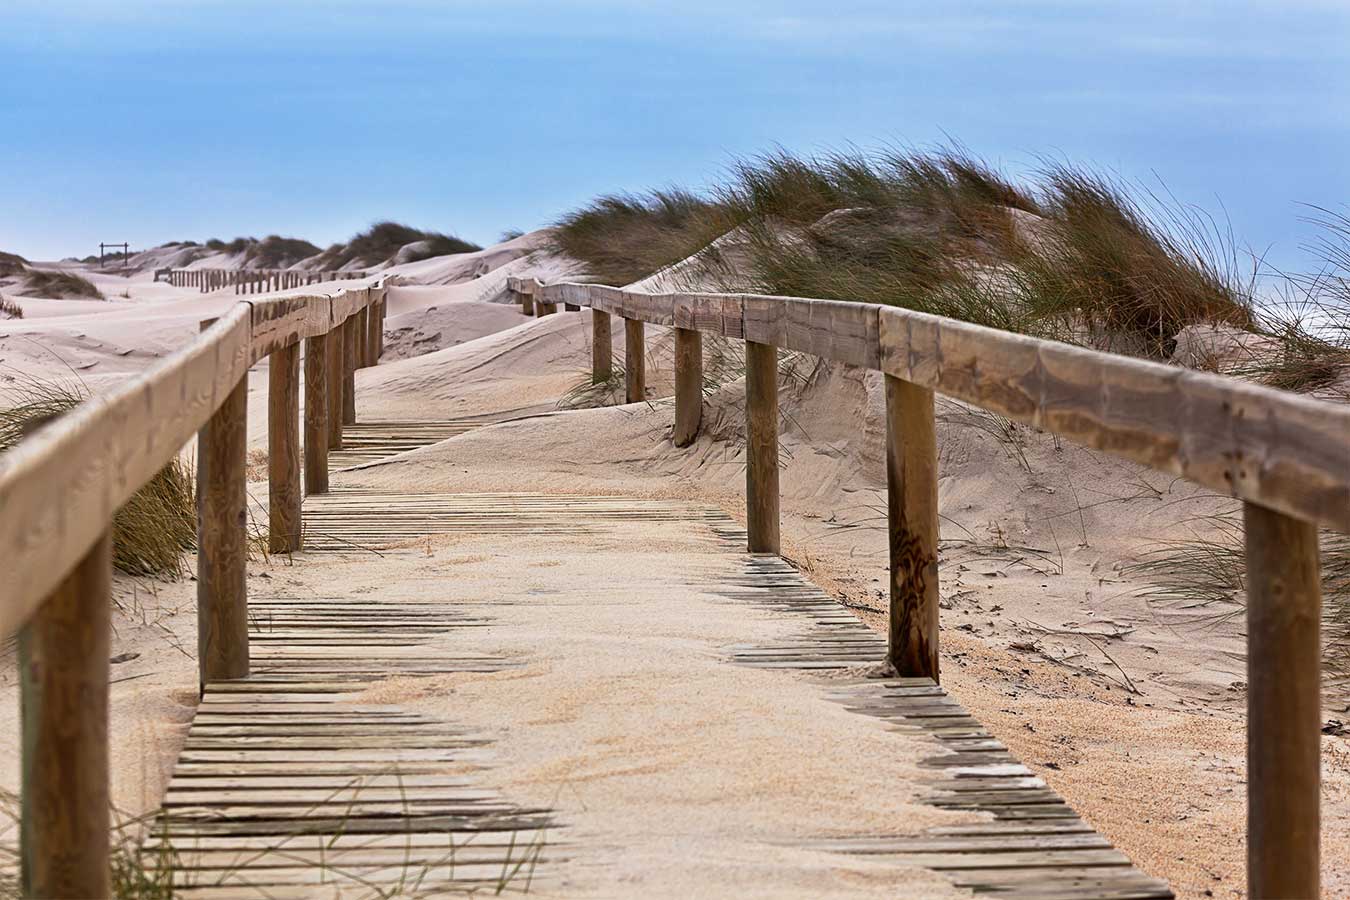 Part of Barrinha de Esmoriz walkways route, near the dunes in Esmoriz, Aveiro district, Portugal.